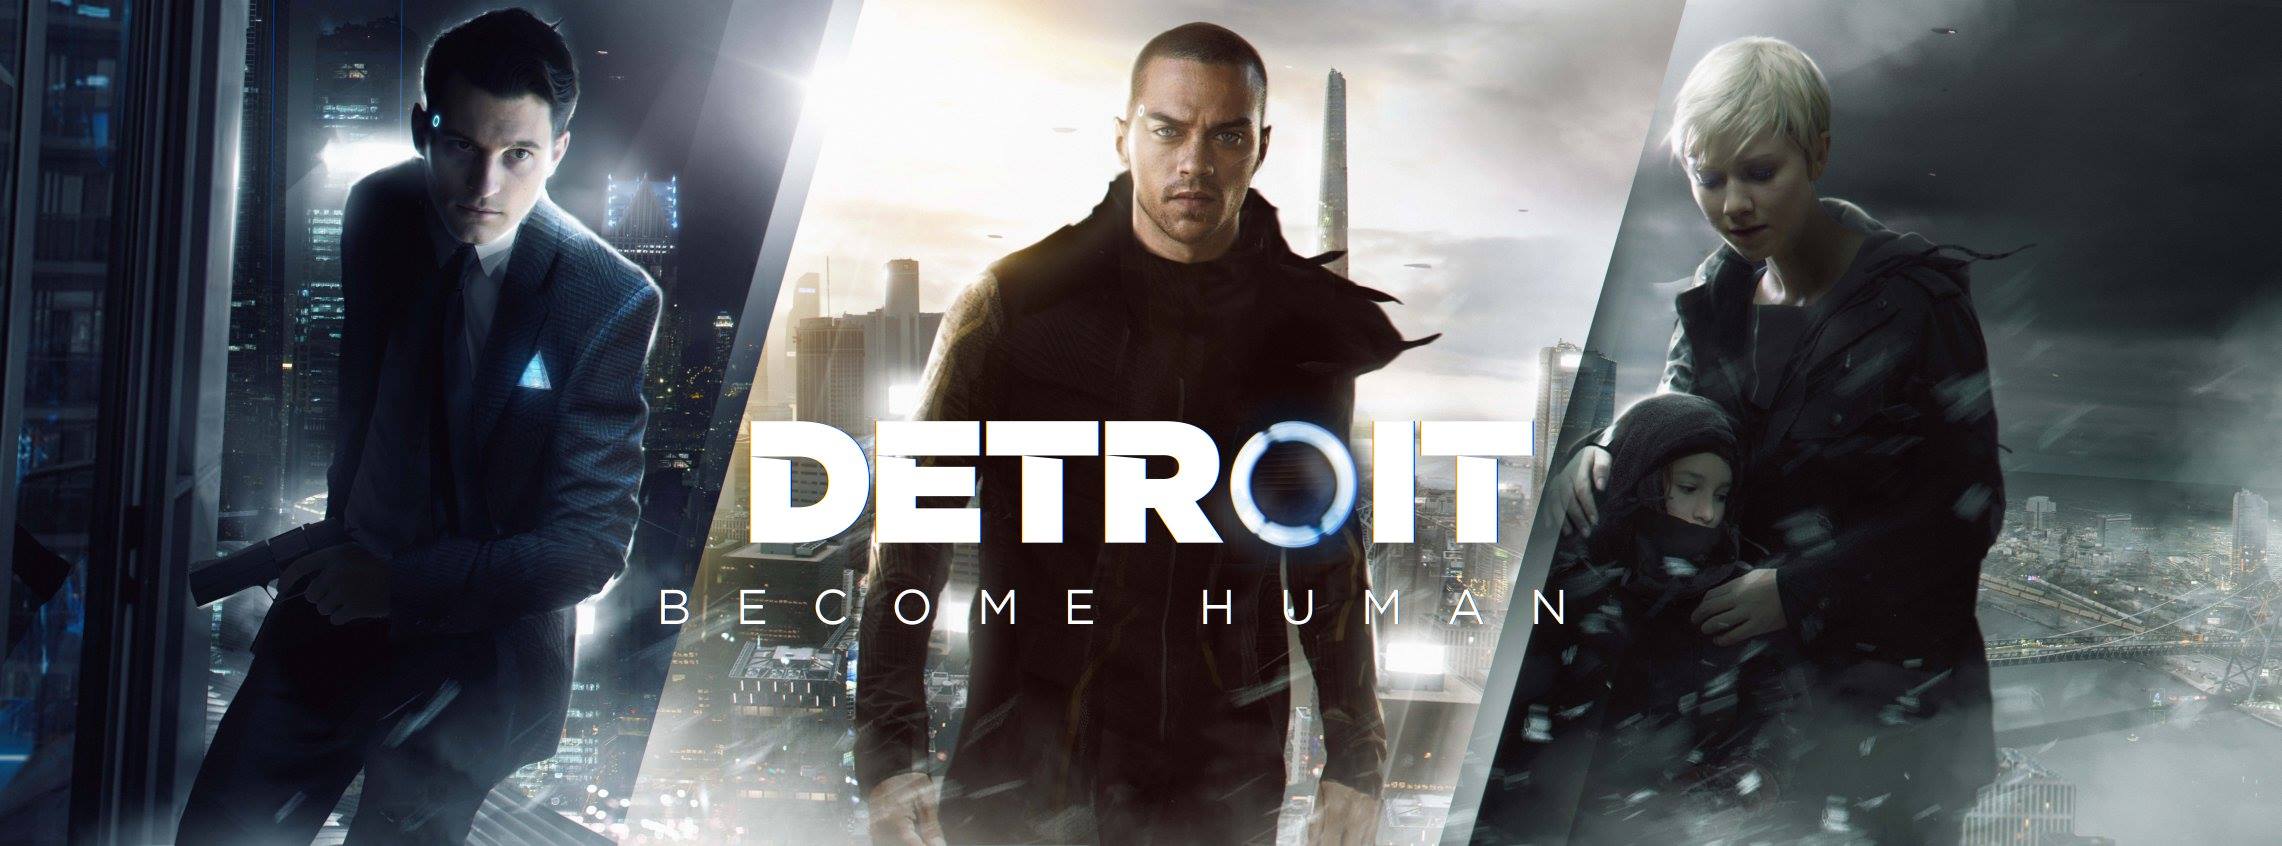 Detroit: Become Human – Collector’s Edition im Handel verfügbar